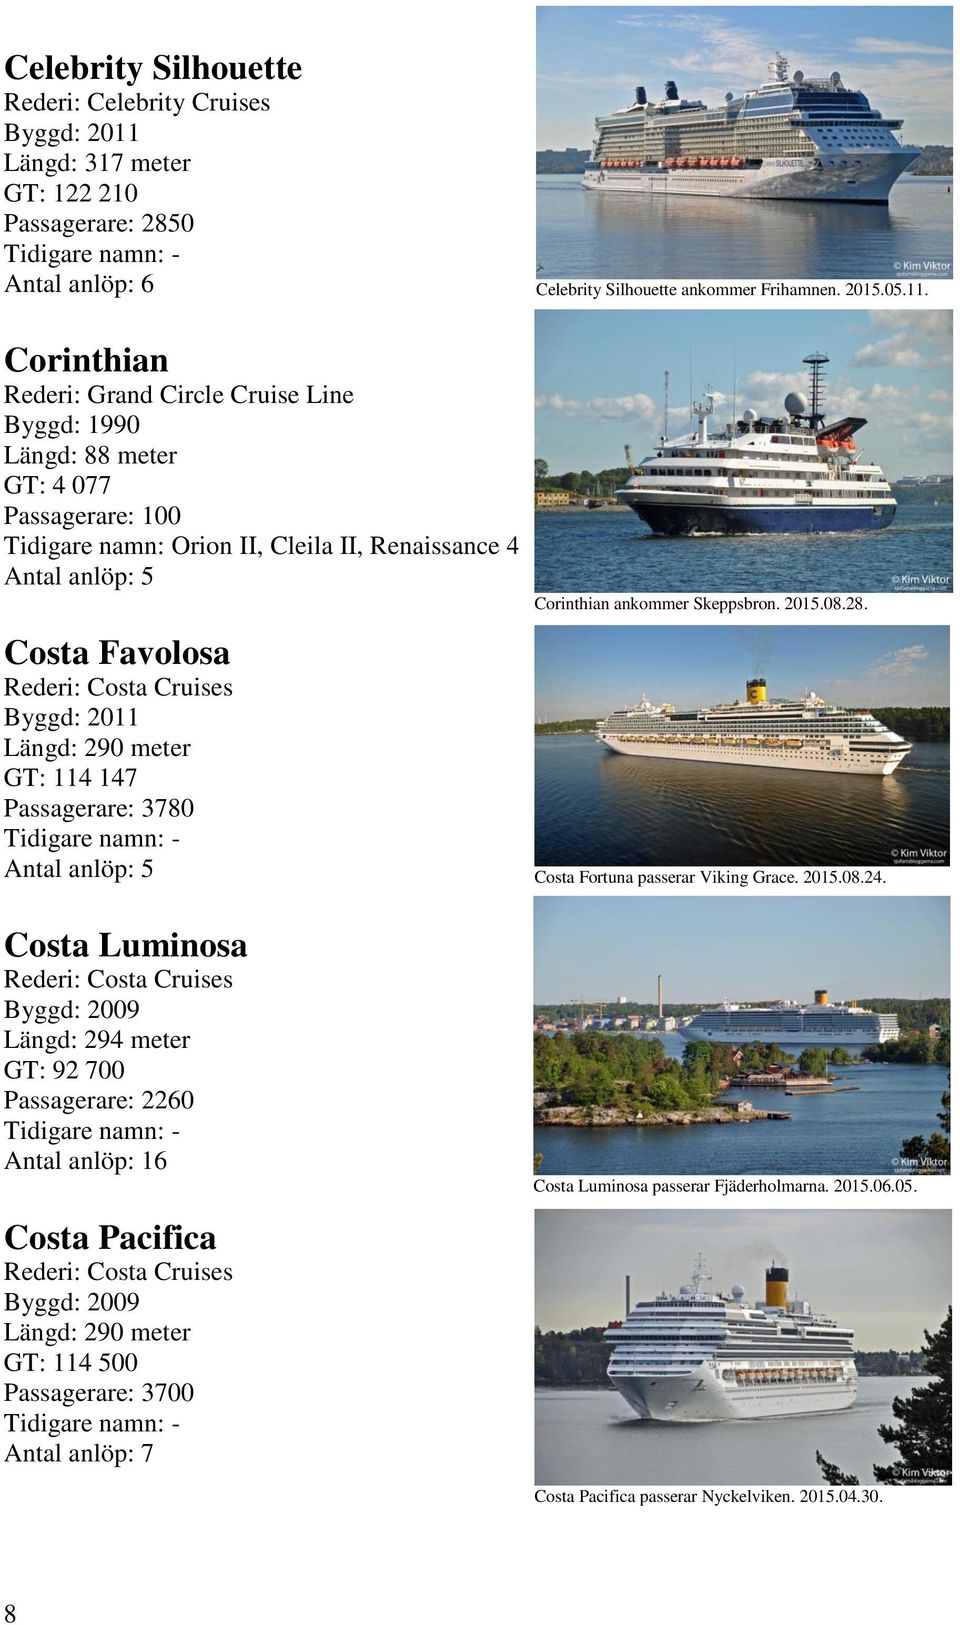 Corinthian Rederi: Grand Circle Cruise Line Byggd: 1990 Längd: 88 meter GT: 4 077 Passagerare: 100 Tidigare namn: Orion II, Cleila II, Renaissance 4 Antal anlöp: 5 Costa Favolosa Rederi: Costa